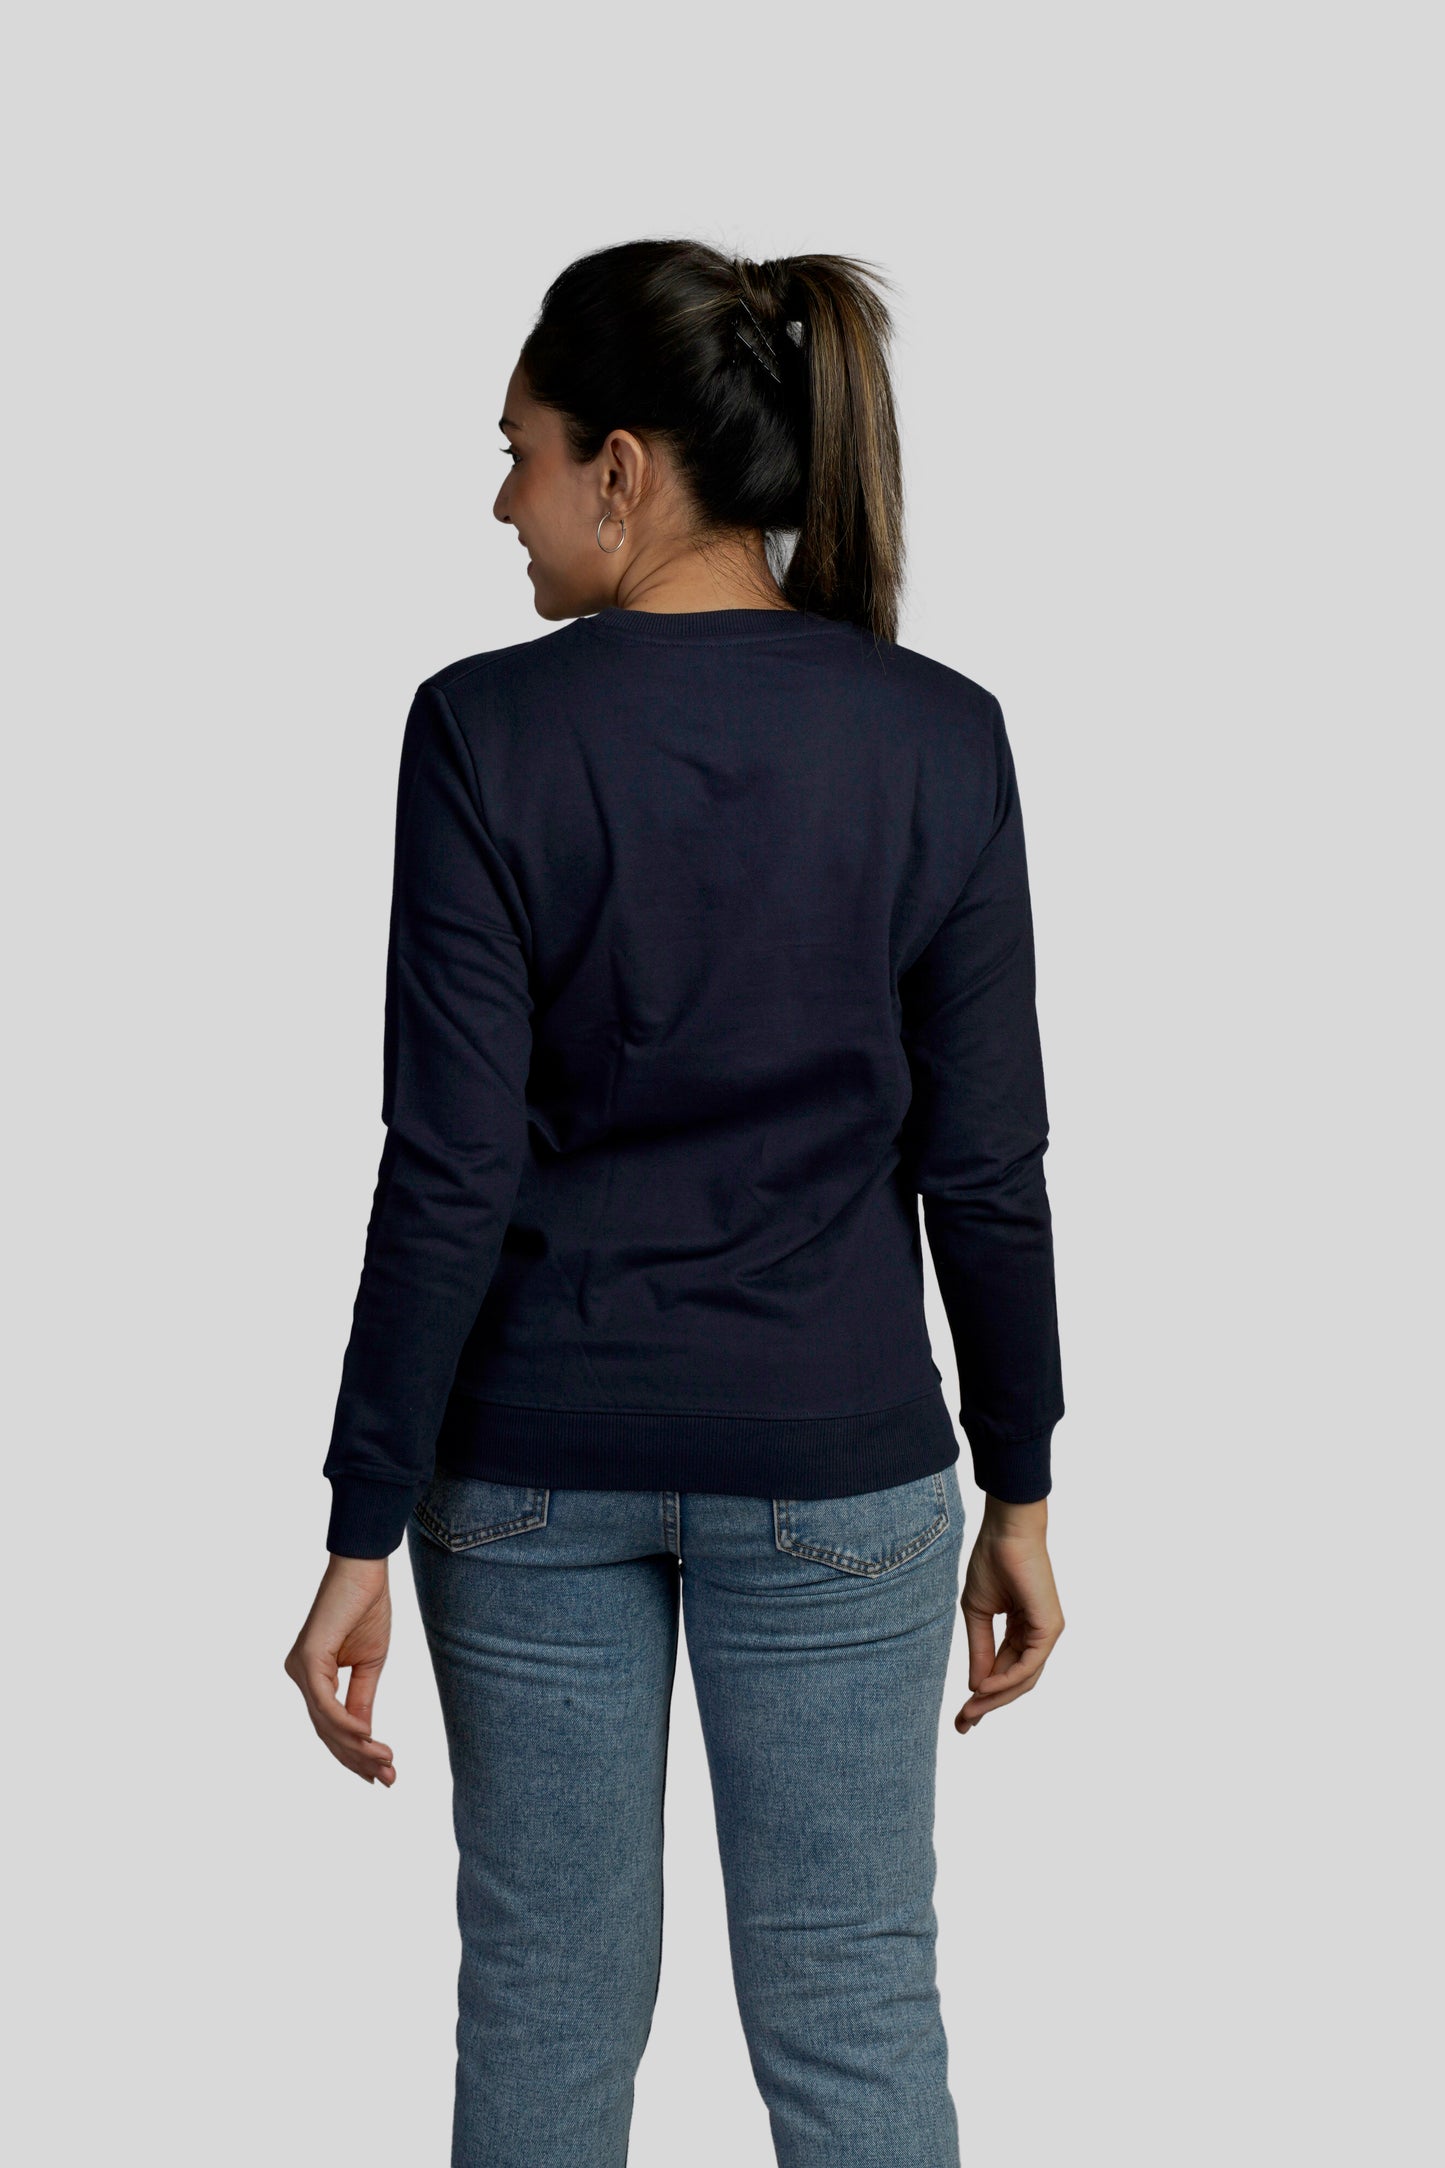 Prizmwear Women Navy Sweatshirt365 - Prizmwear